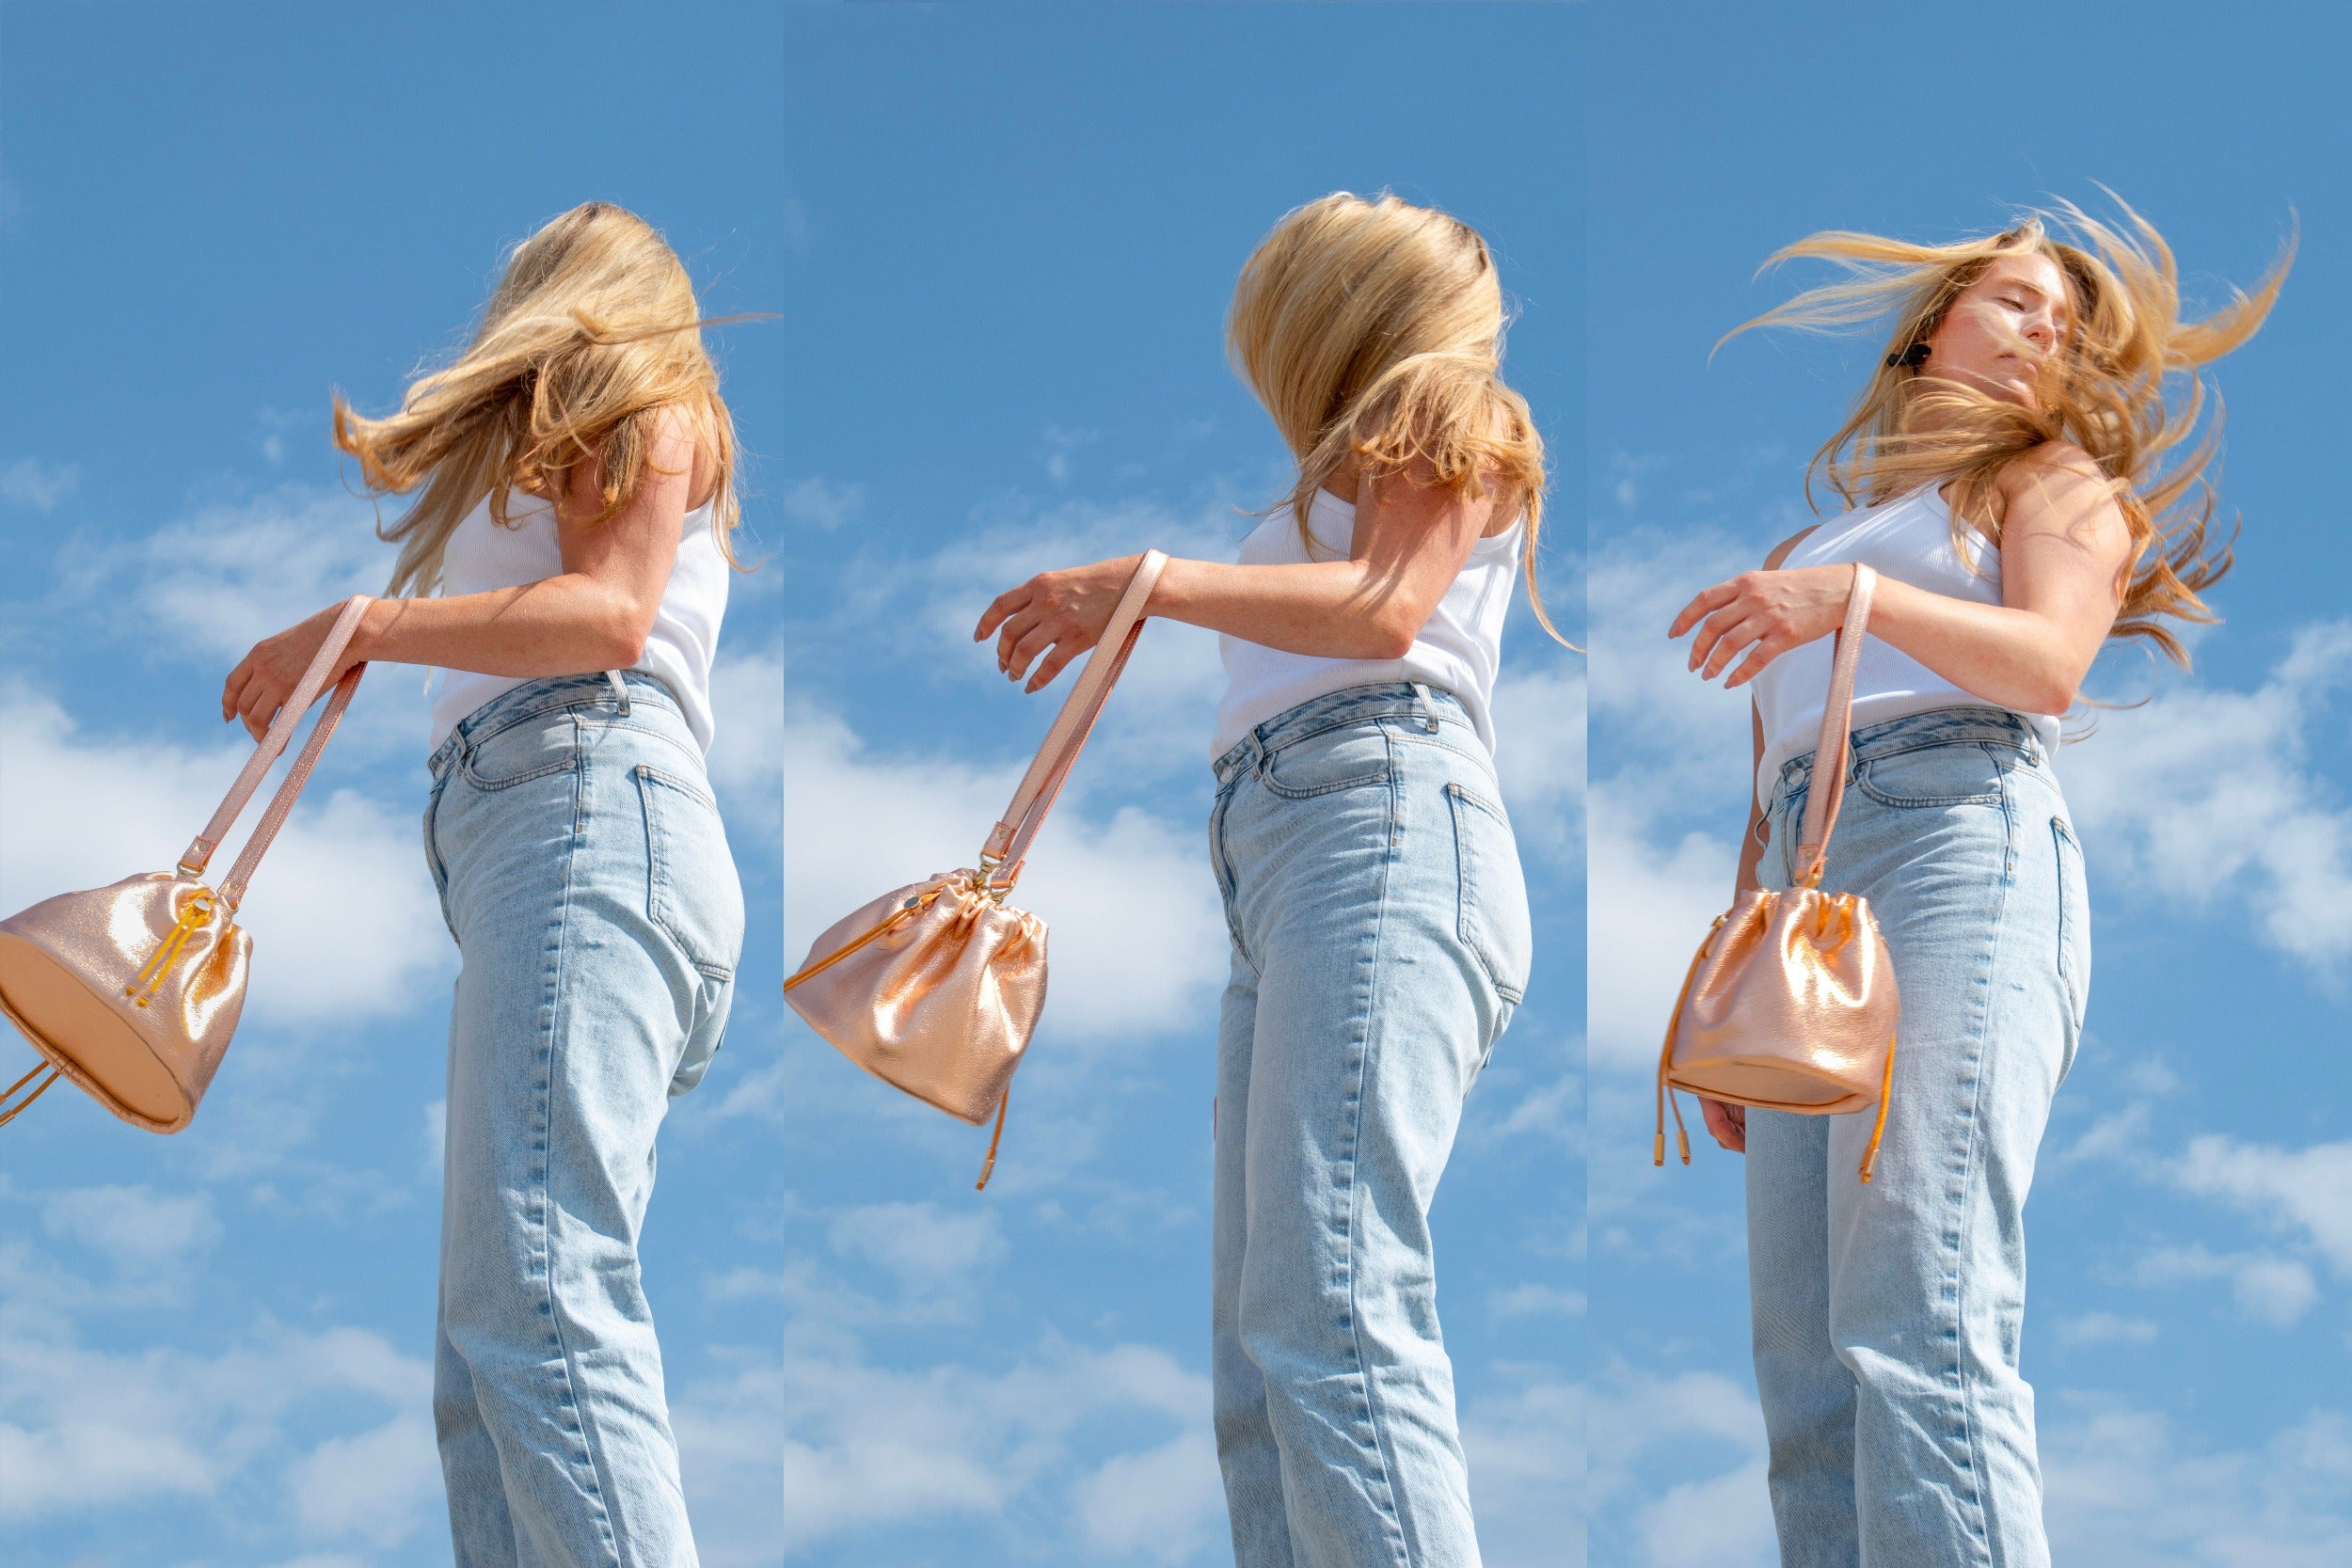 model flipping hair carrying rose gold medium sized shoulder bag with drawstring closure